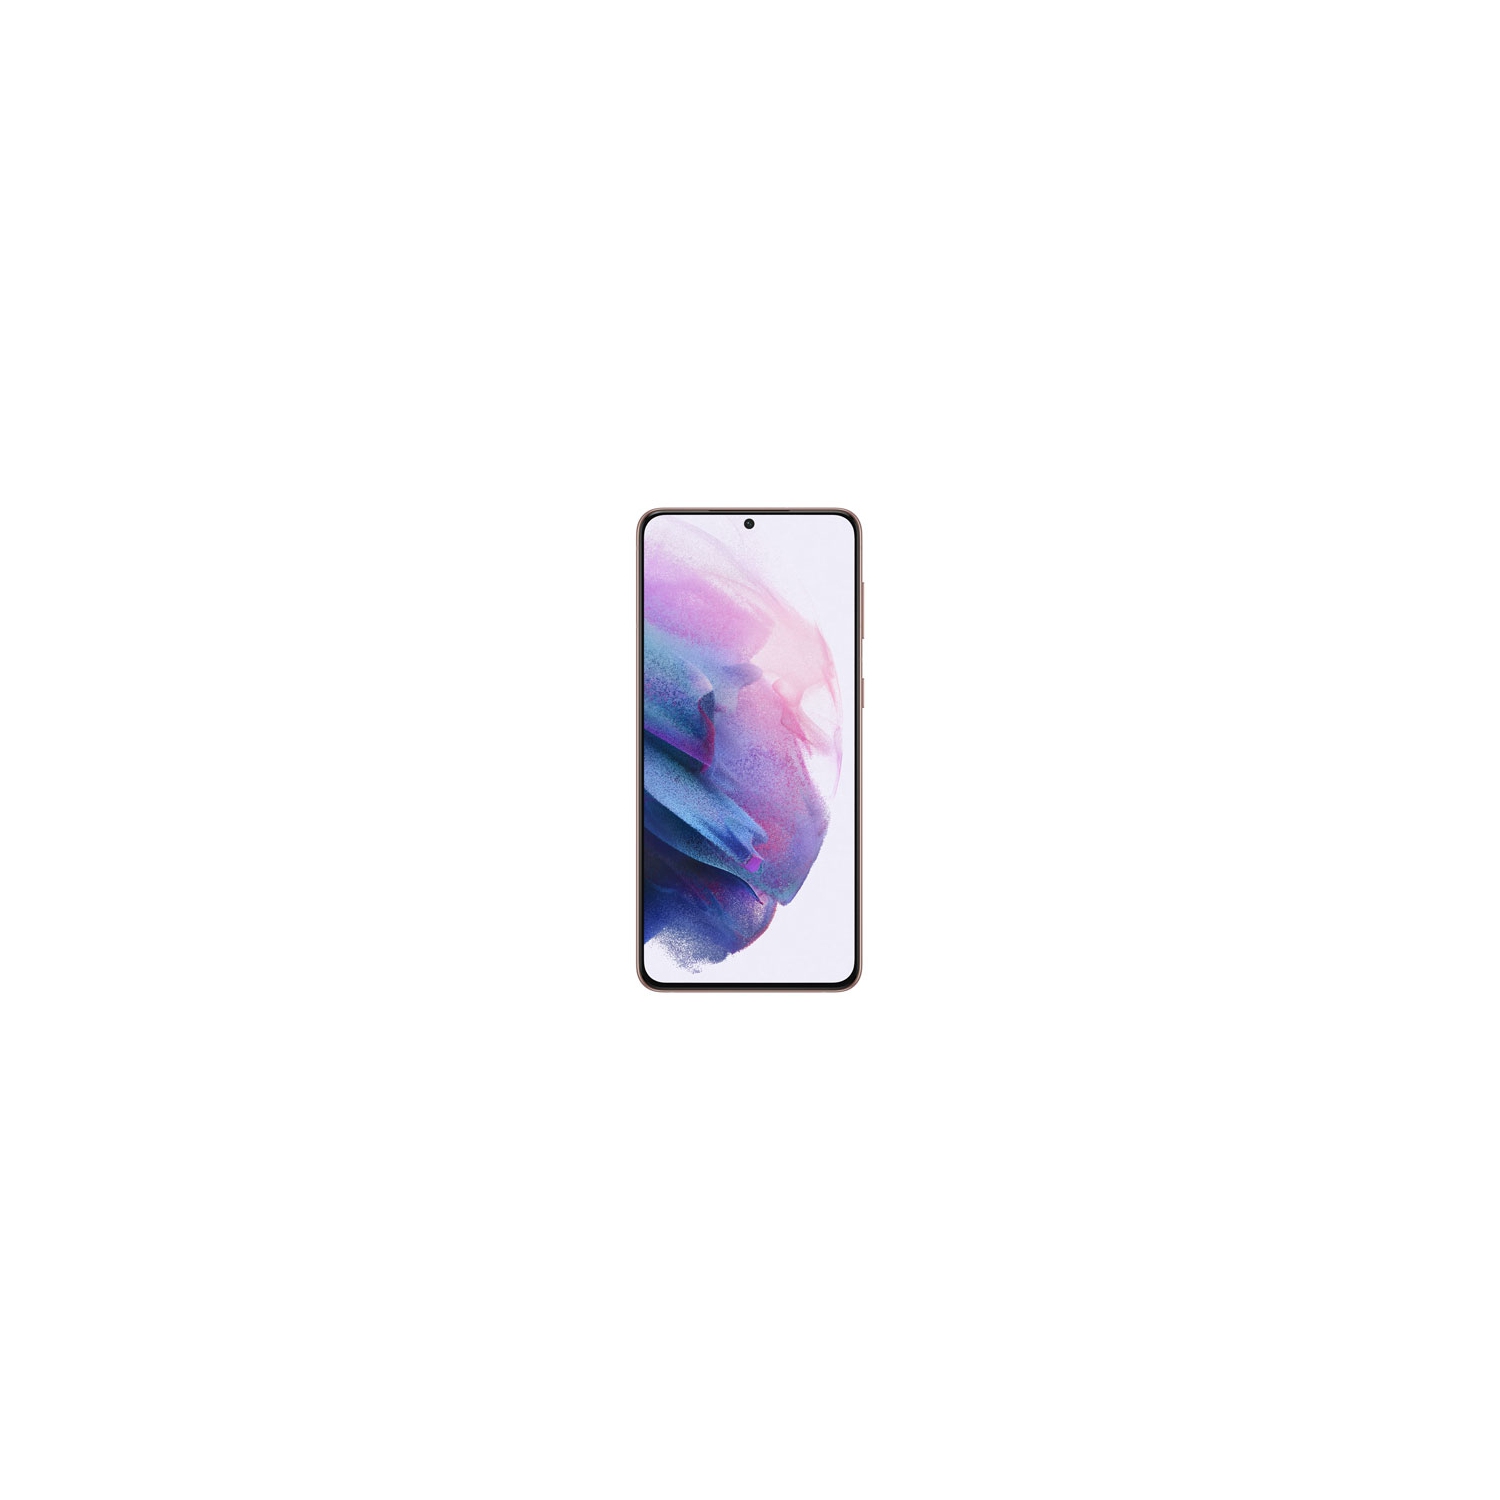 Refurbished (Excellent) - Samsung Galaxy S21+ 128GB Smartphone - Phantom Violet - Unlocked - Certified Refurbished